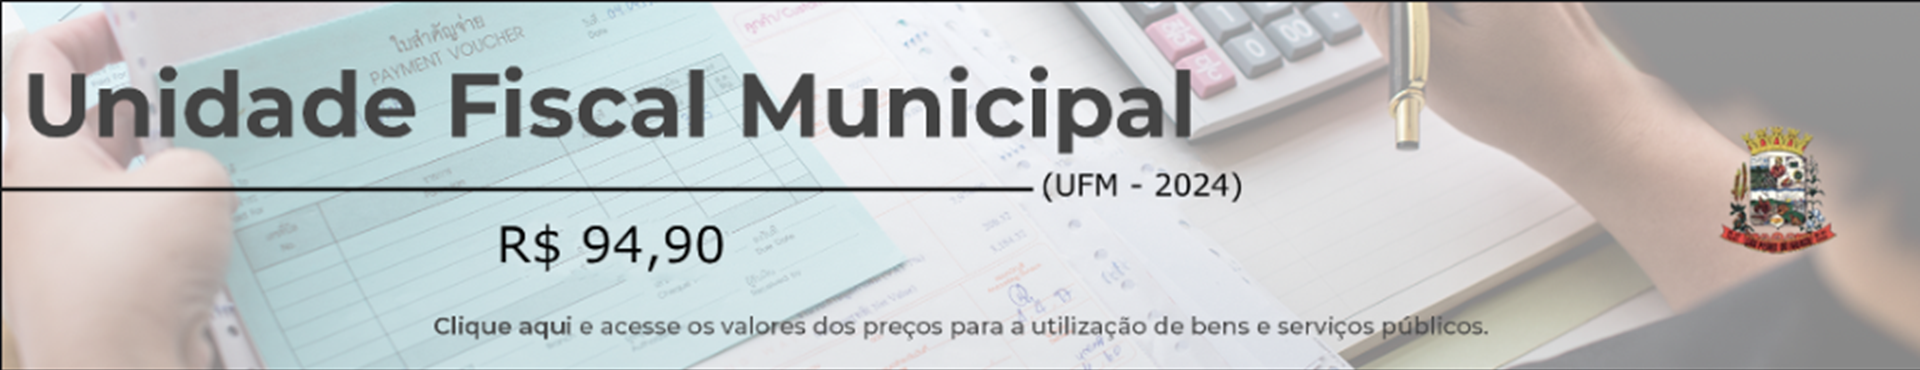 UNIDADE FISCAL MUNICIPAL - UFM 2023